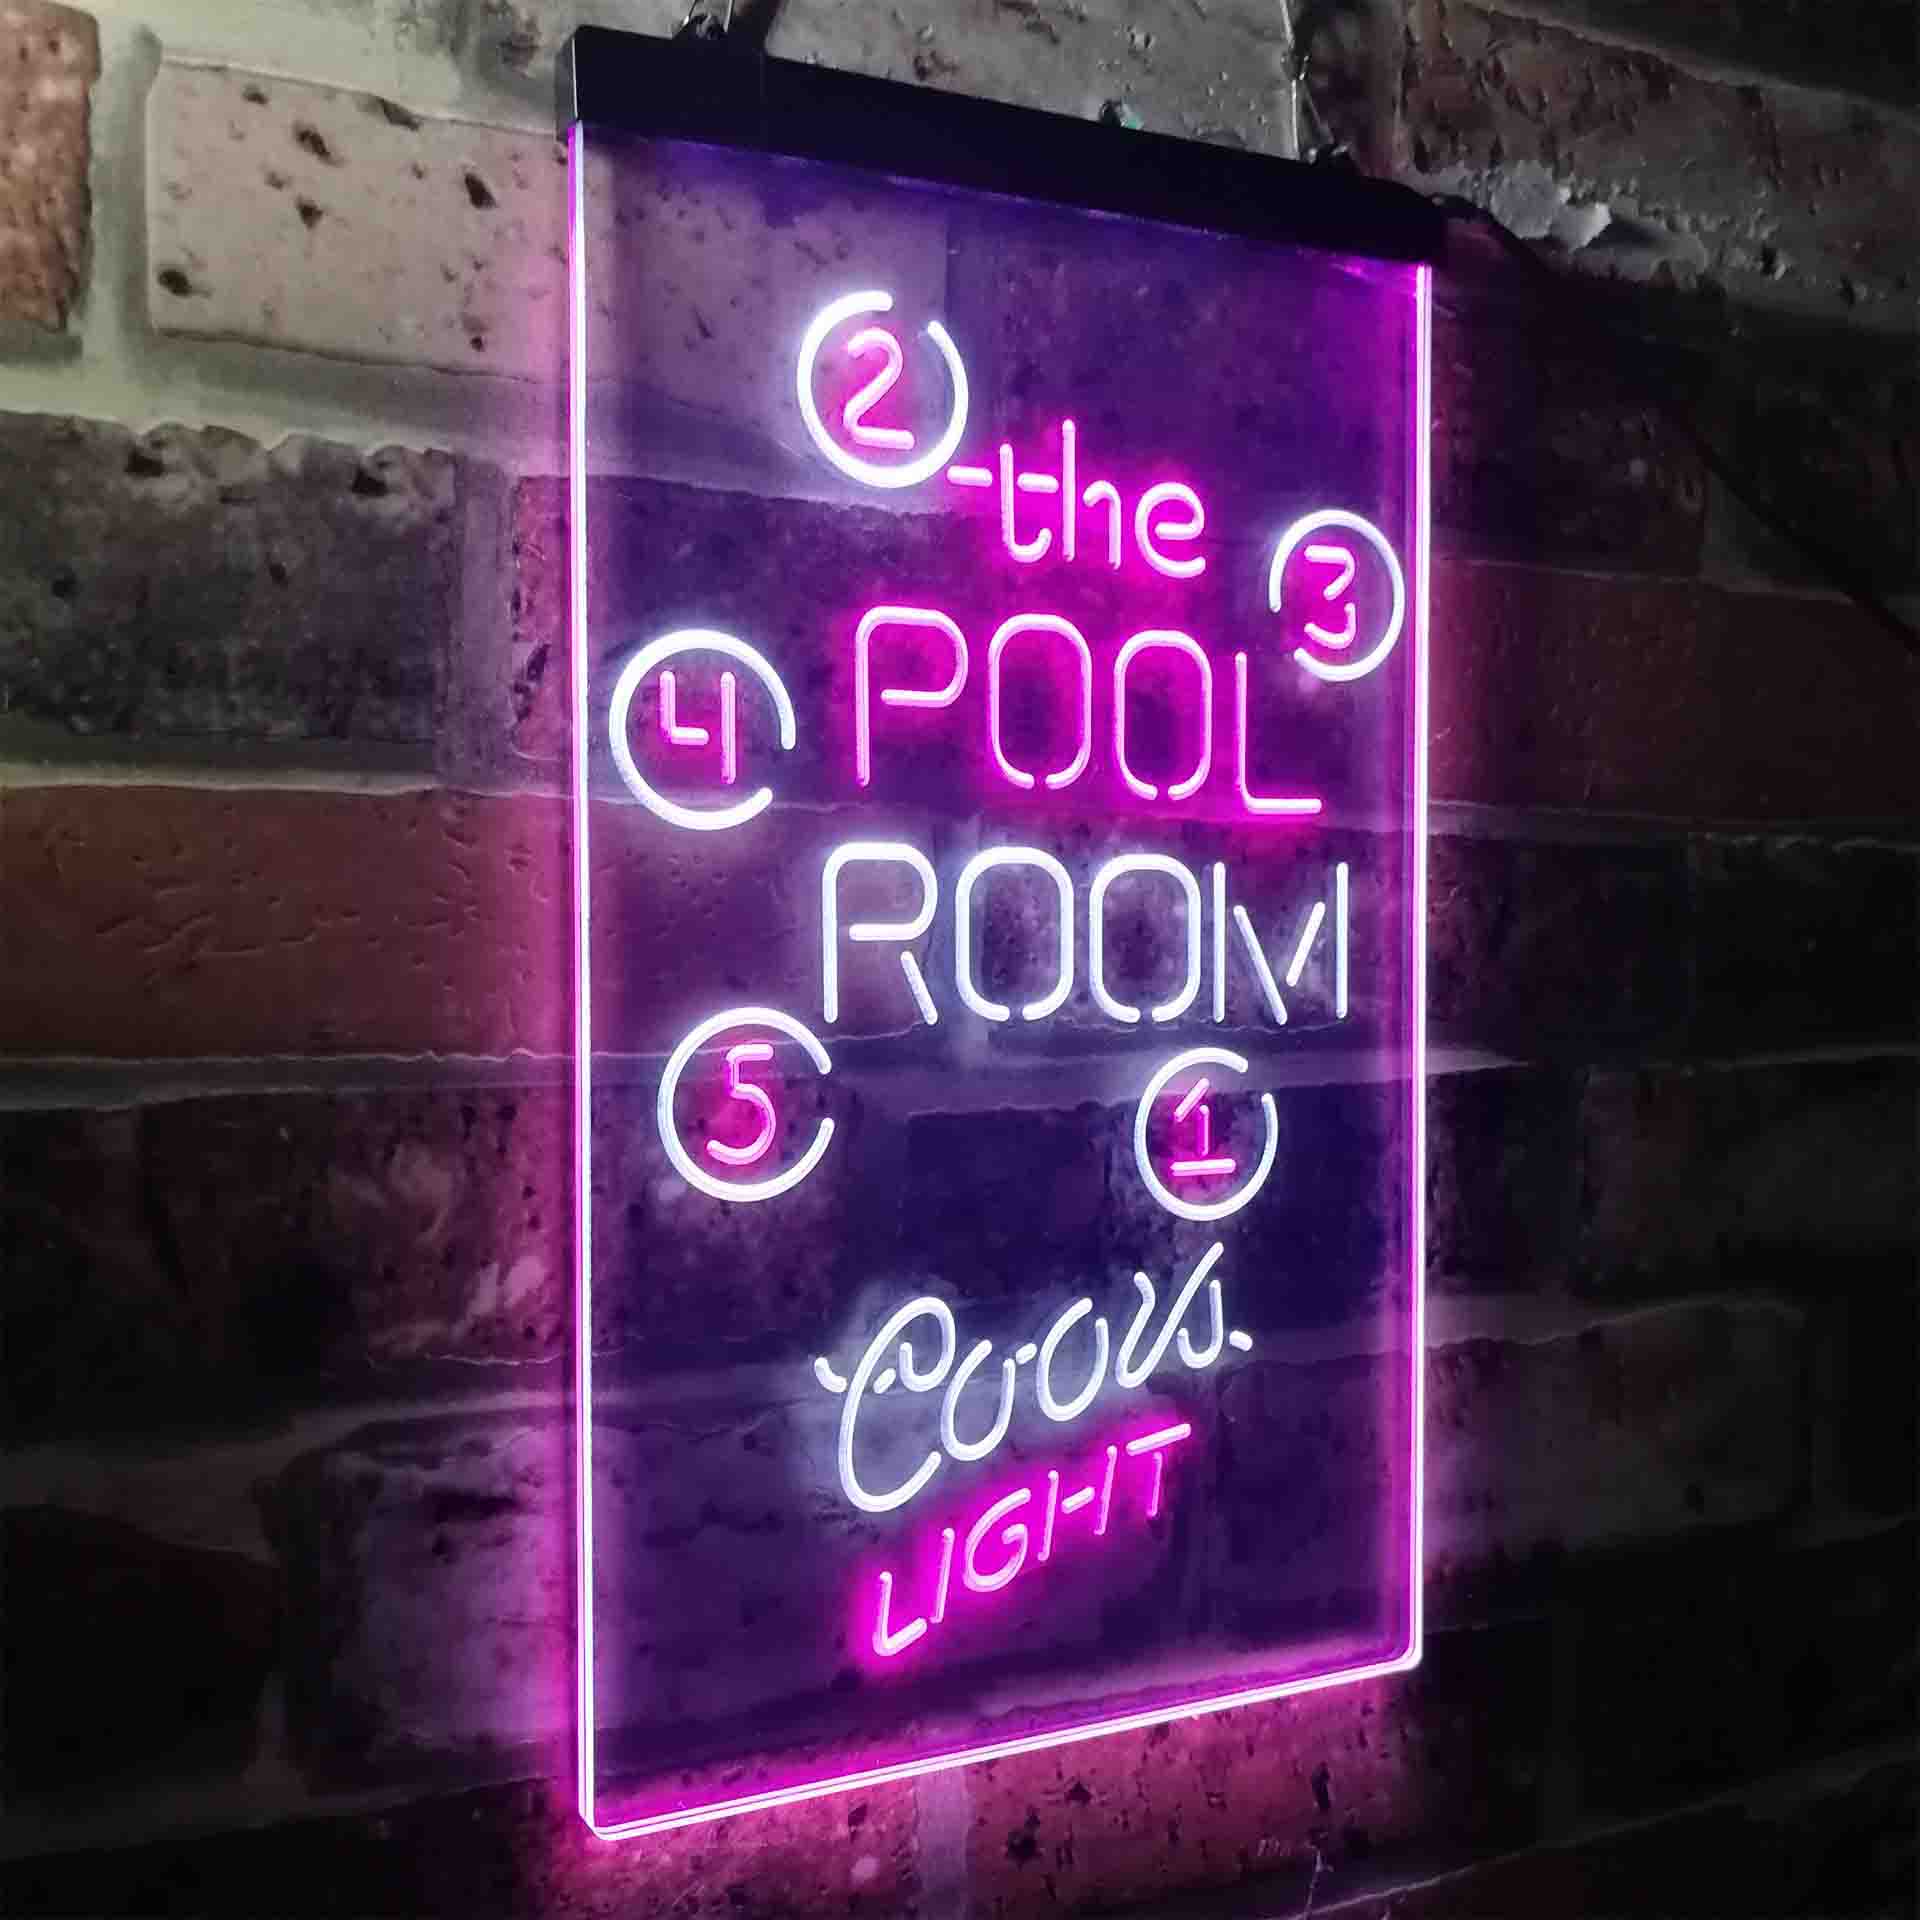 Coors Light Pool Room Man Cave Neon-Like LED Sign